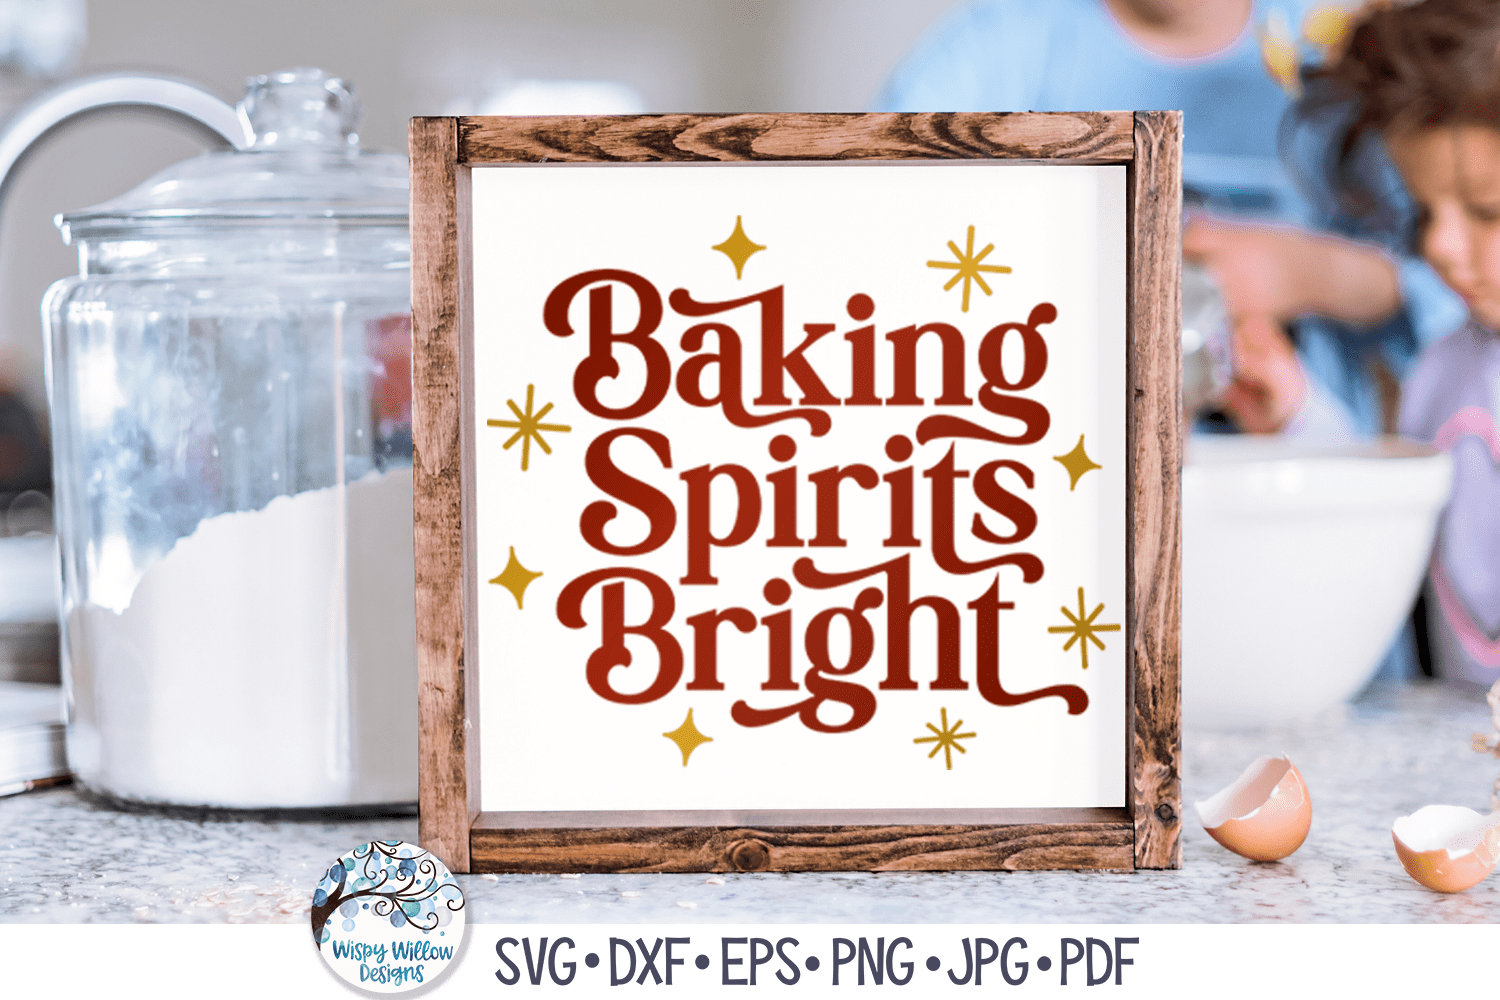 Baking Spirits Bright SVG | Retro Christmas SVG Wispy Willow Designs Company